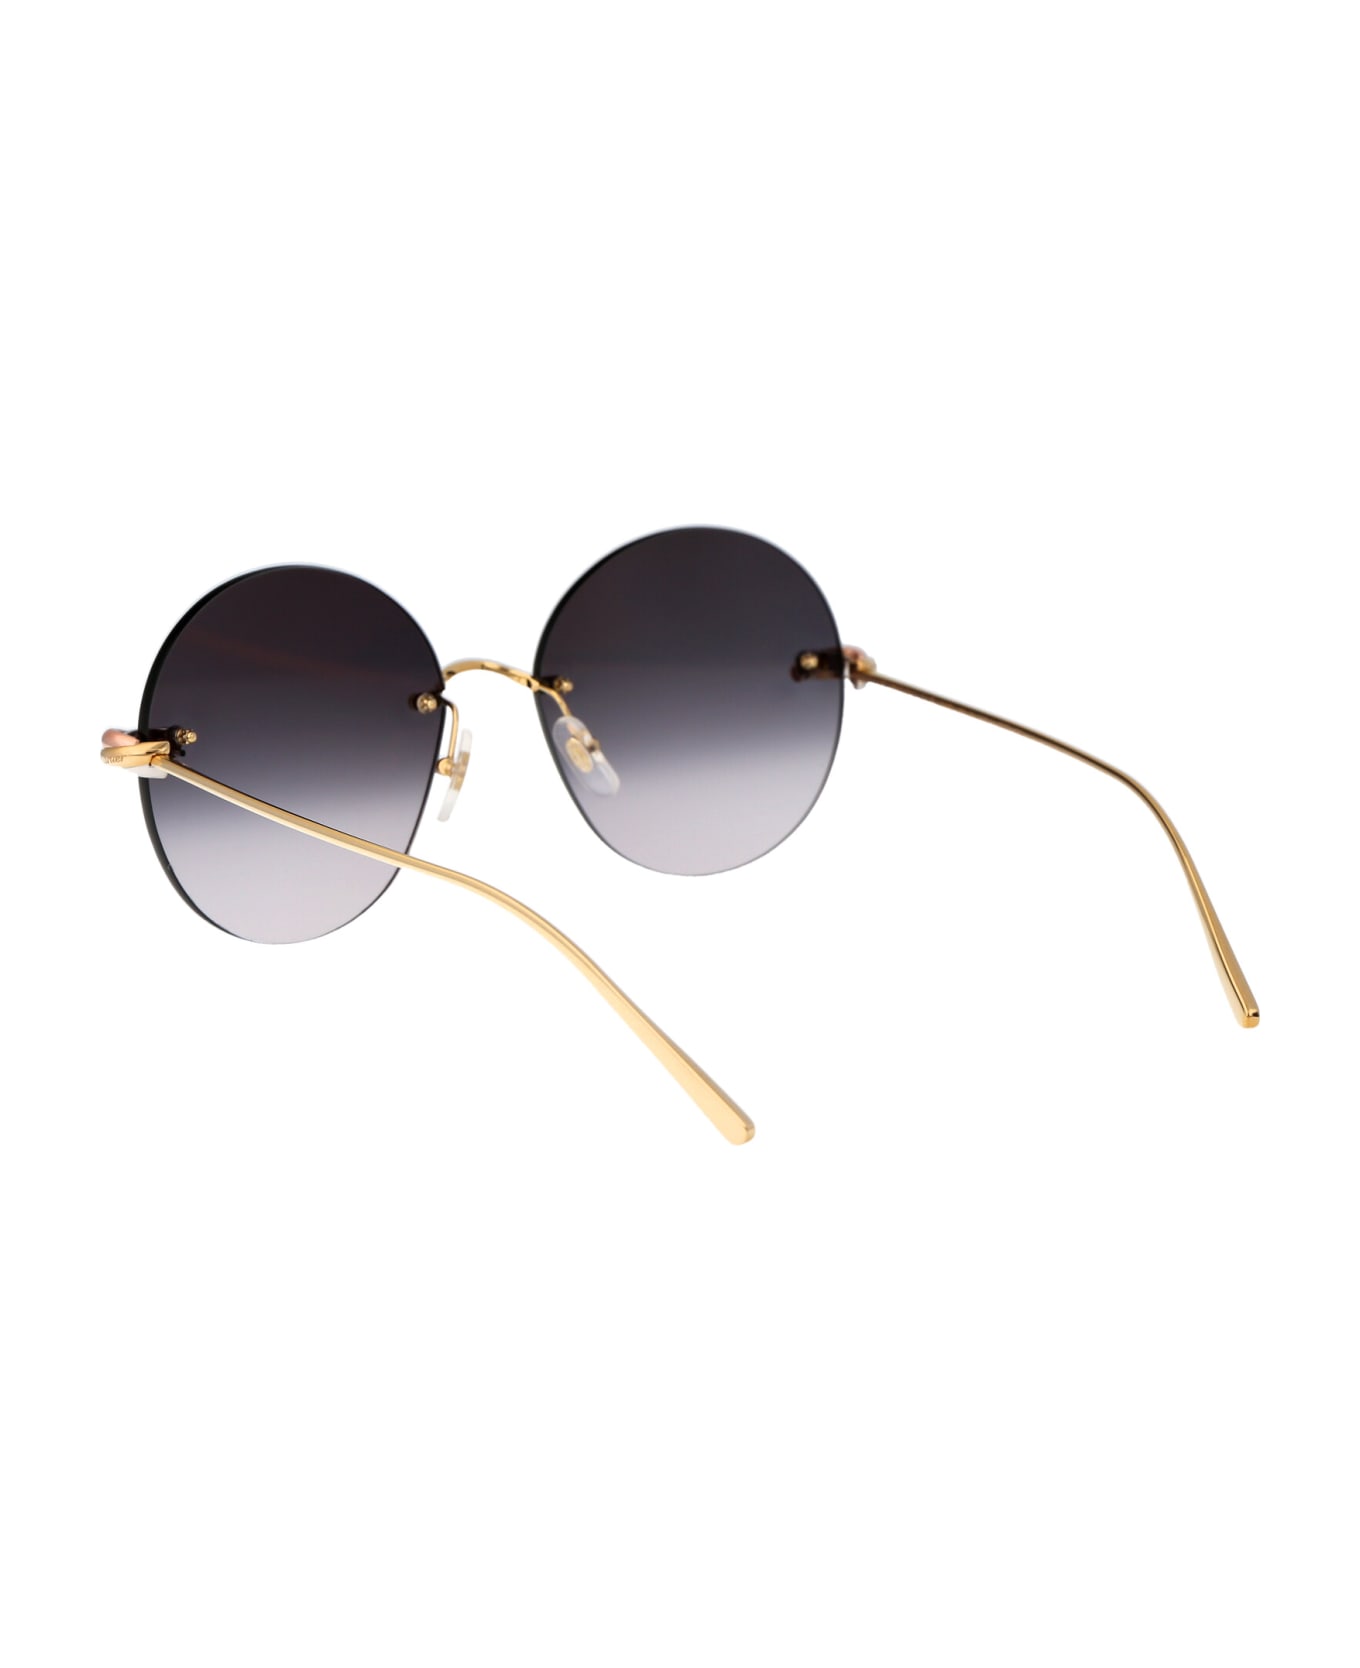 Cartier Eyewear Ct0475s Sunglasses - 001 GOLD GOLD GREY